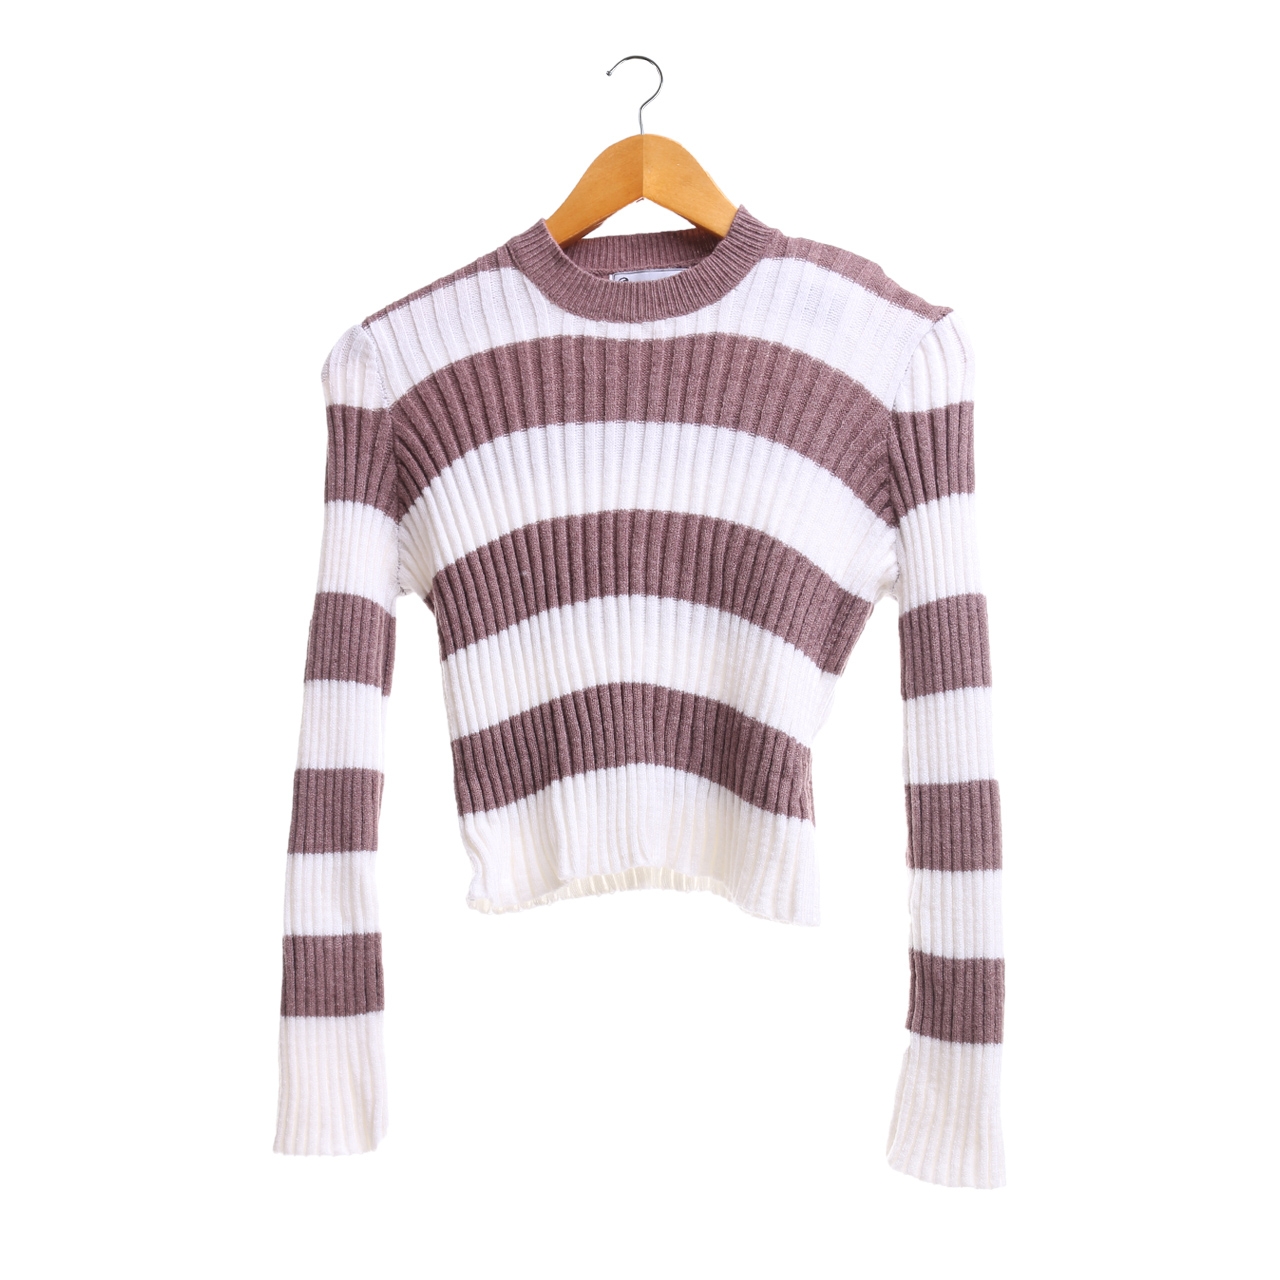 Hervelvetvase Brown & White Striped Sweater